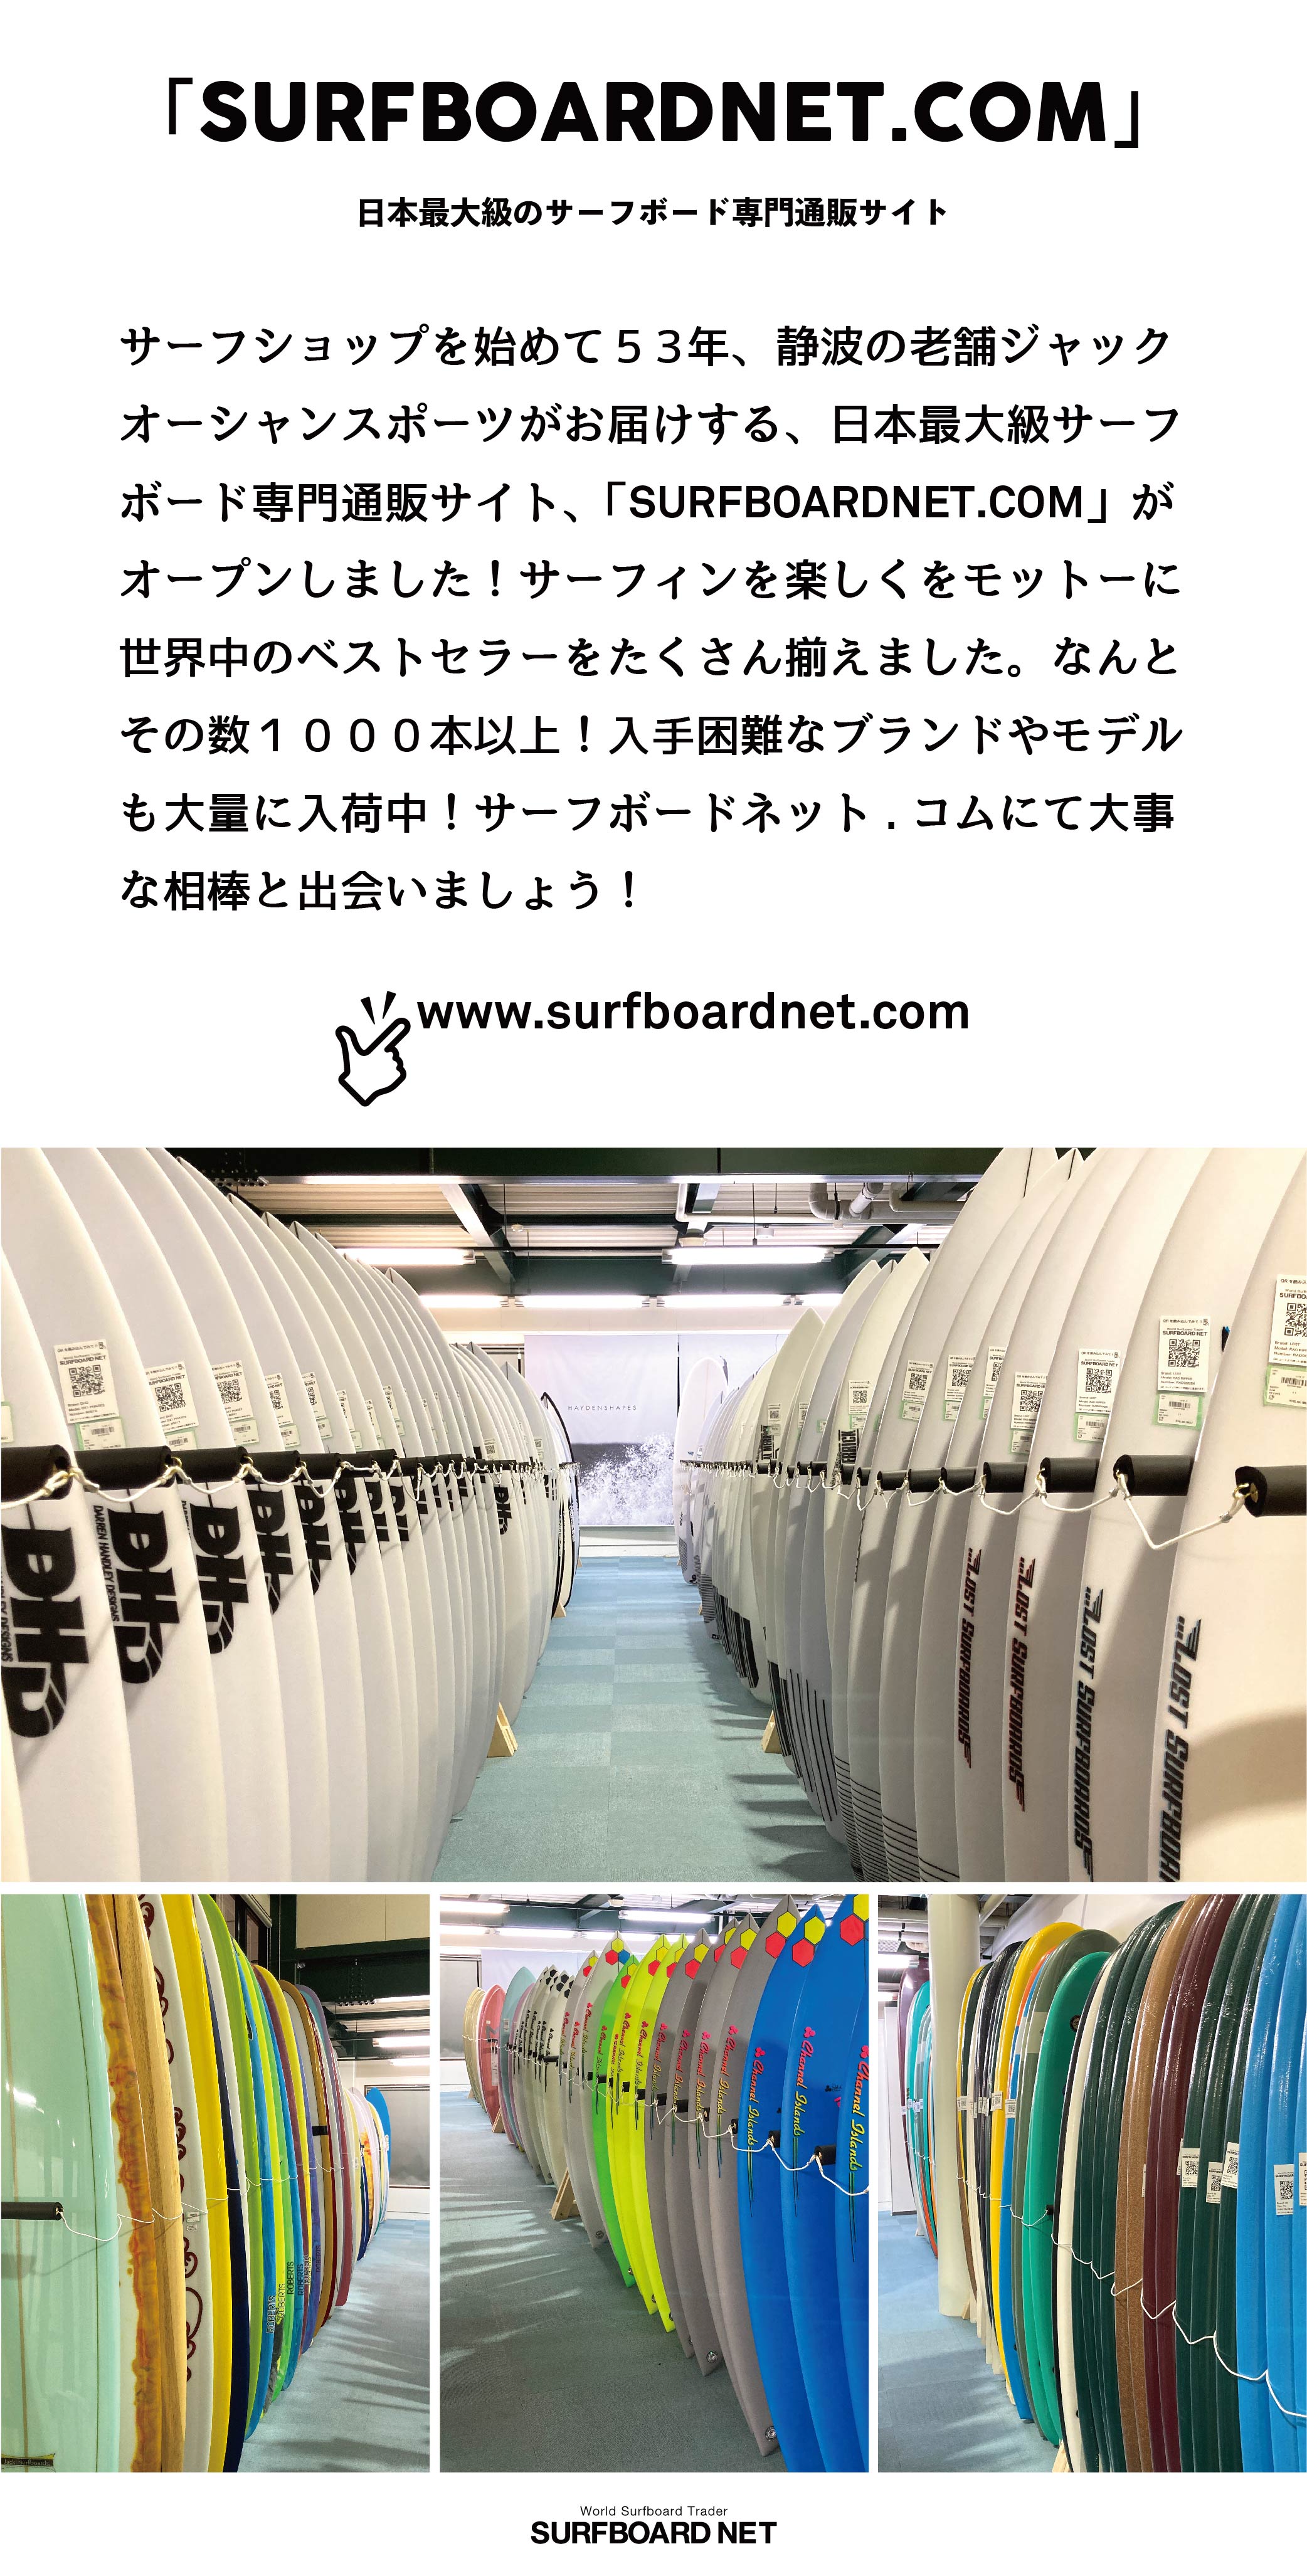 surfboardnet.com